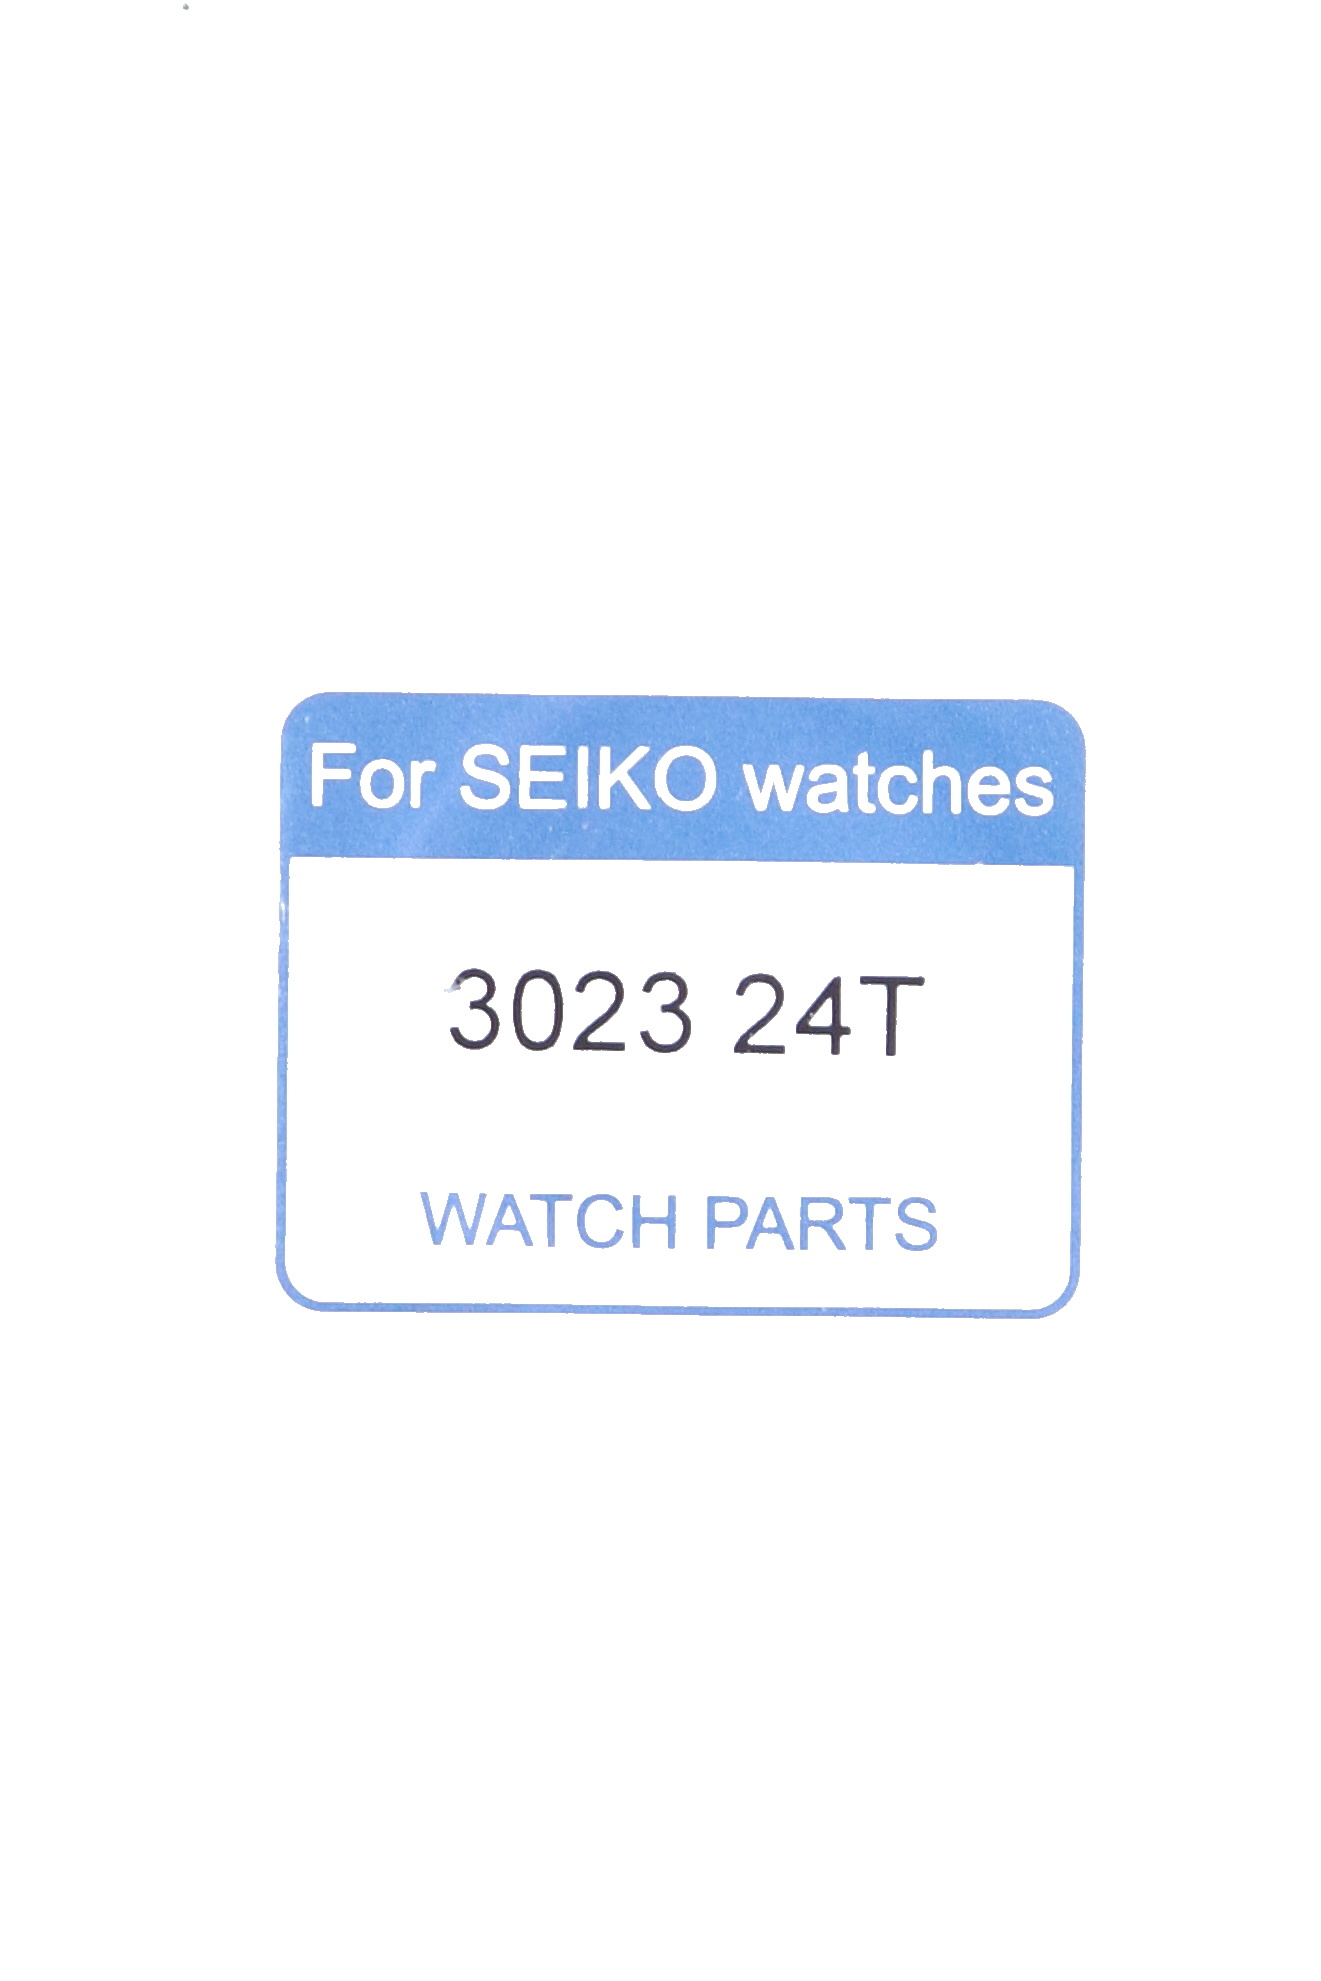 Seiko 302324T Rechargeable Battery SKA581, SNL007 & PAR183 - WatchPlaza